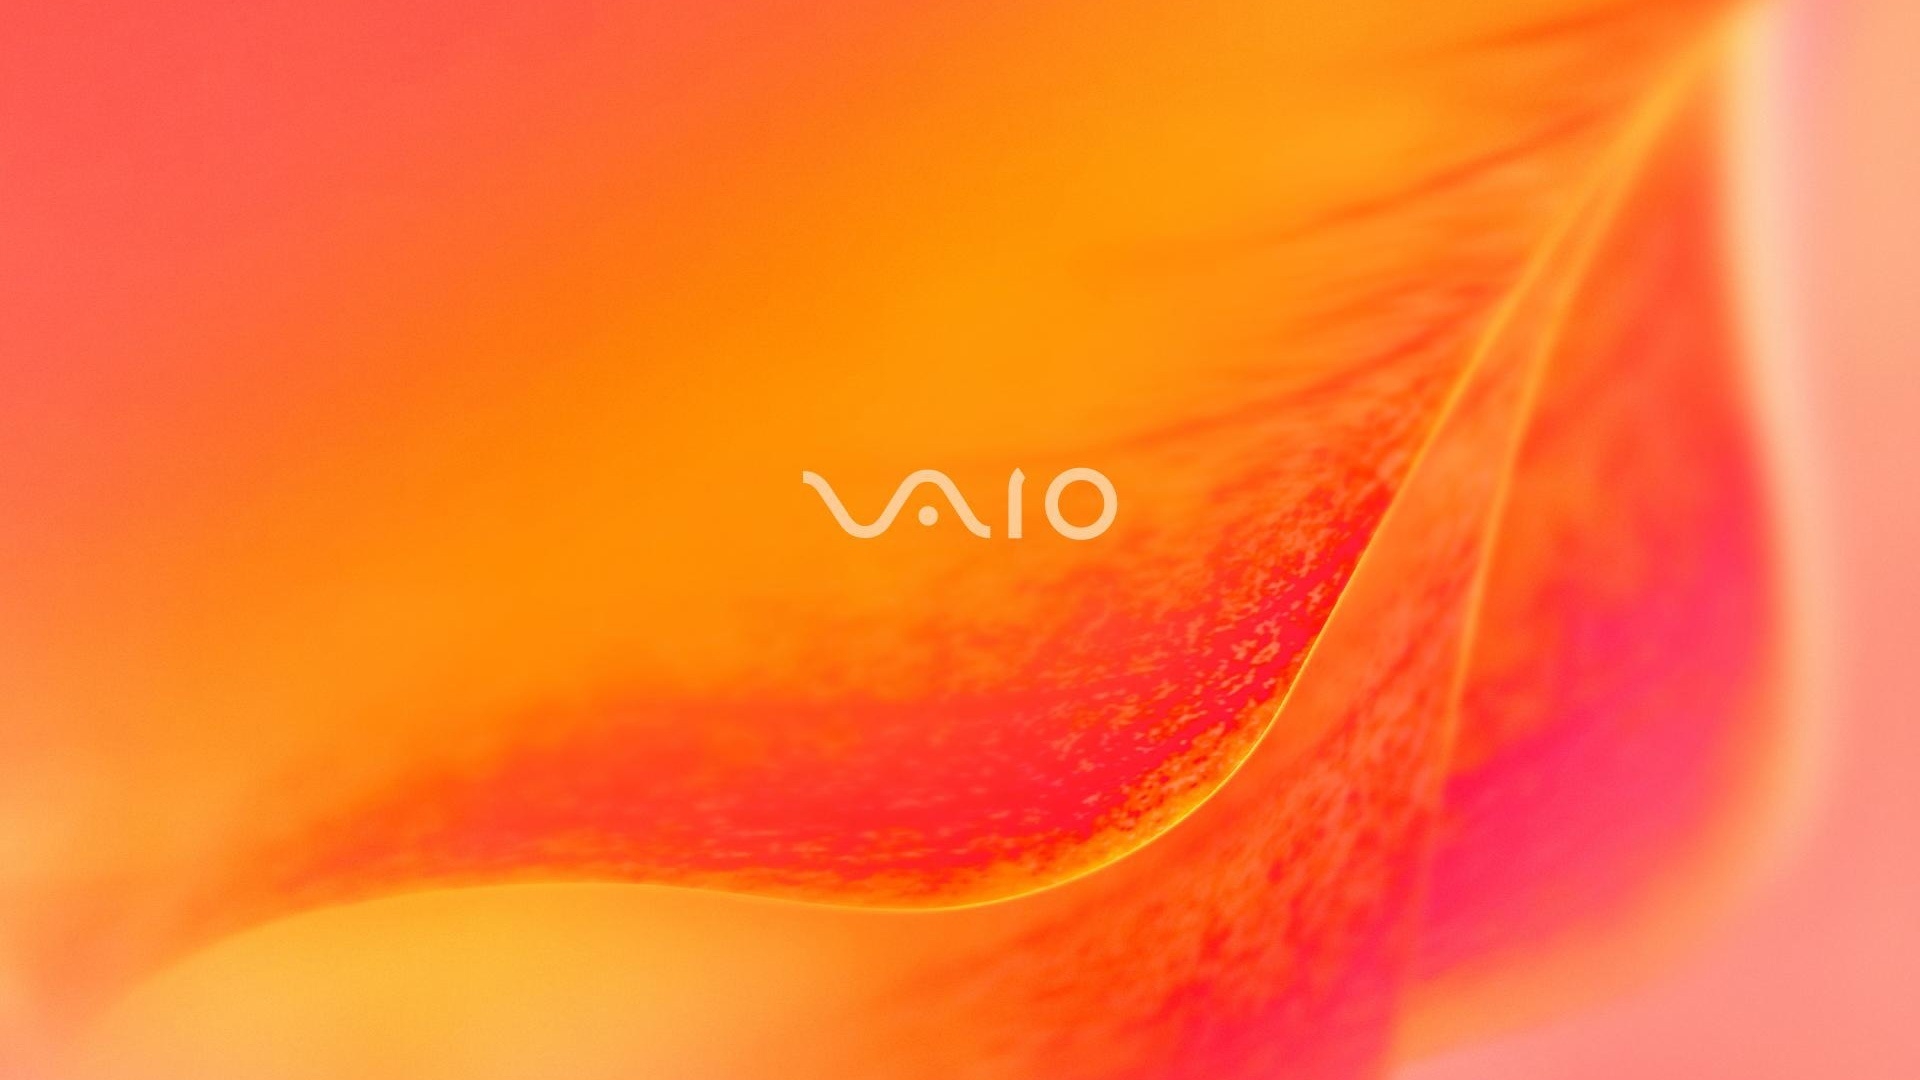 Sony Vaio Orange blossom for 1920 x 1080 HDTV 1080p resolution